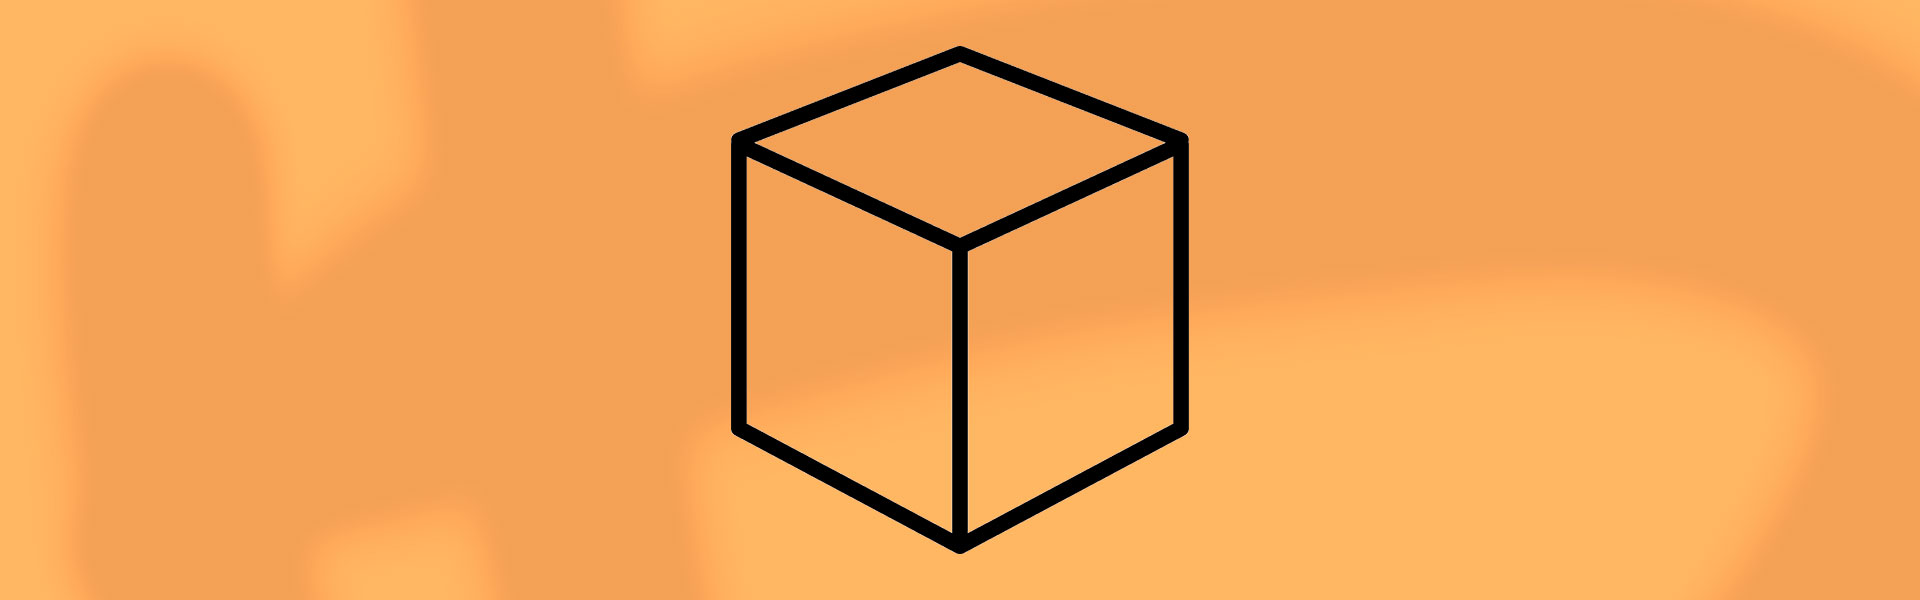 Model of a cube.